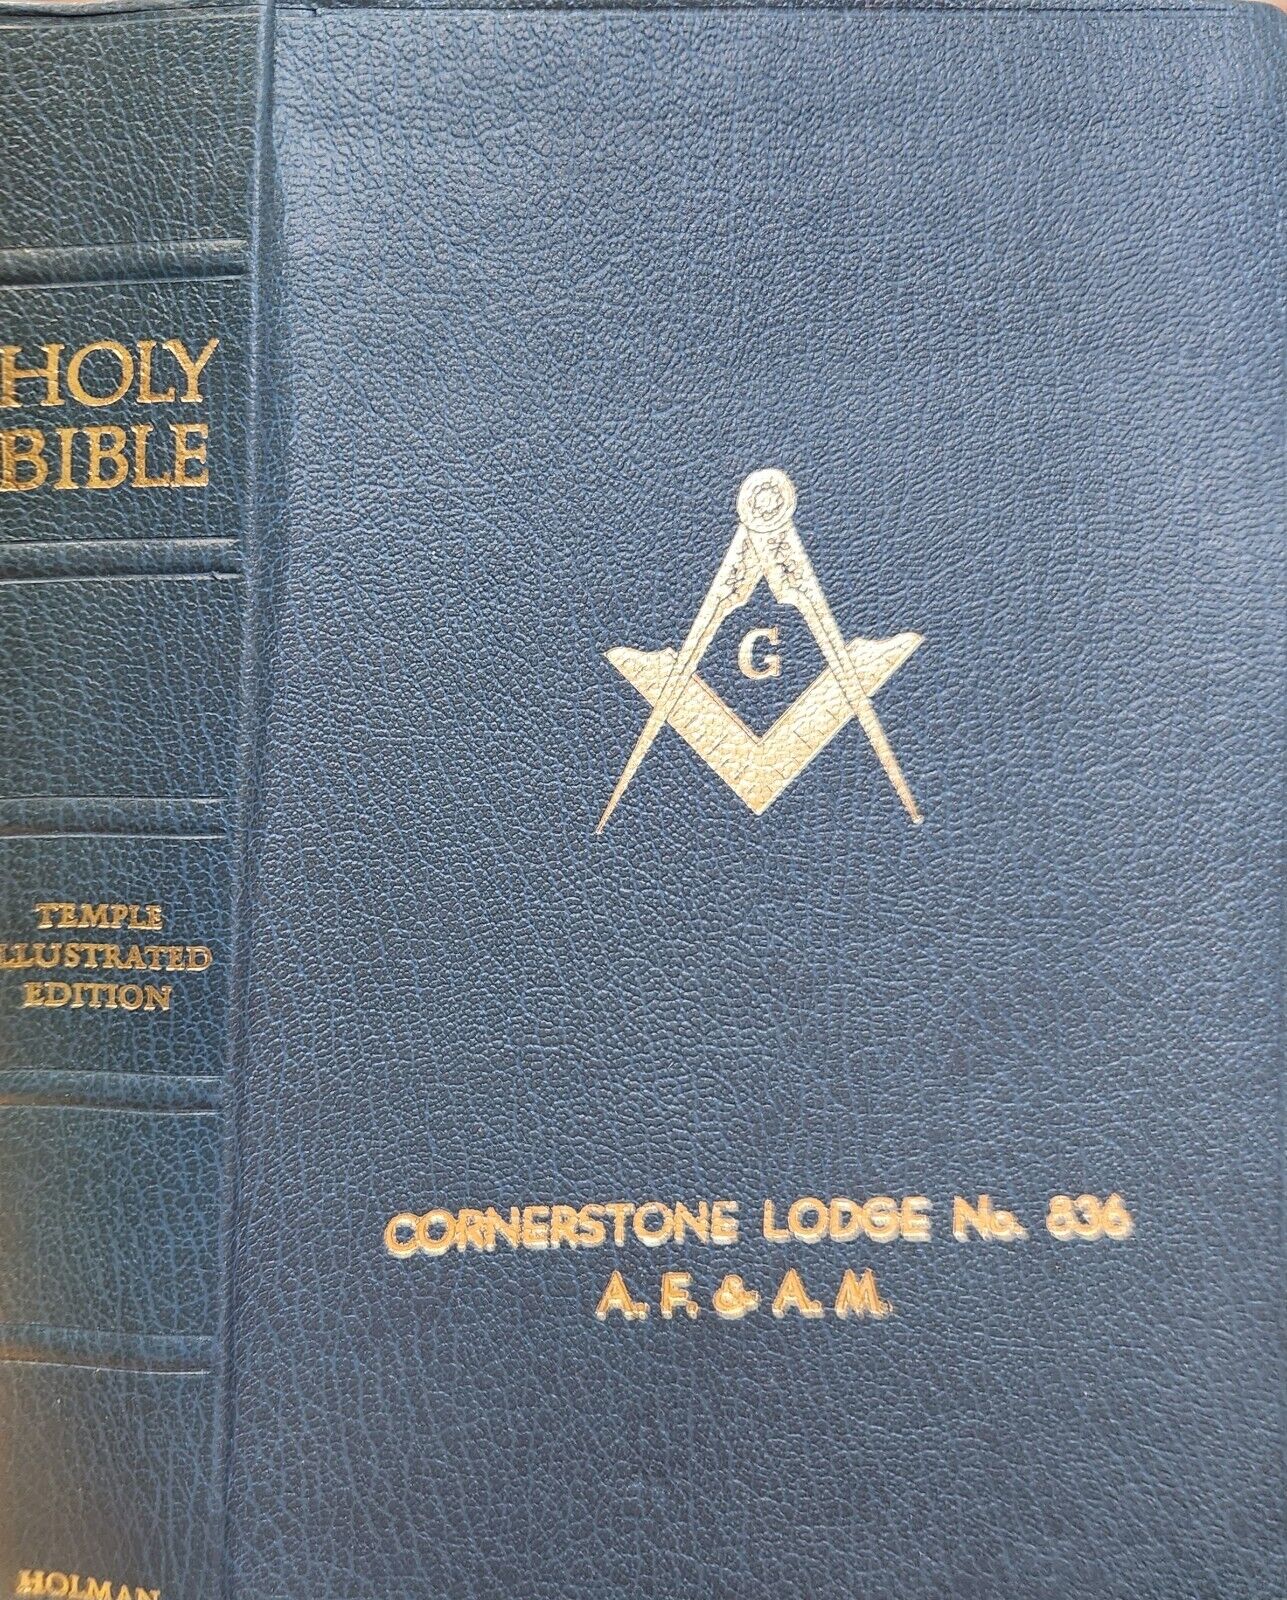 Holy Bible ~ Masonic Edition ~ Temple Illustrated 1968 Cornerstone Lodge No. 836